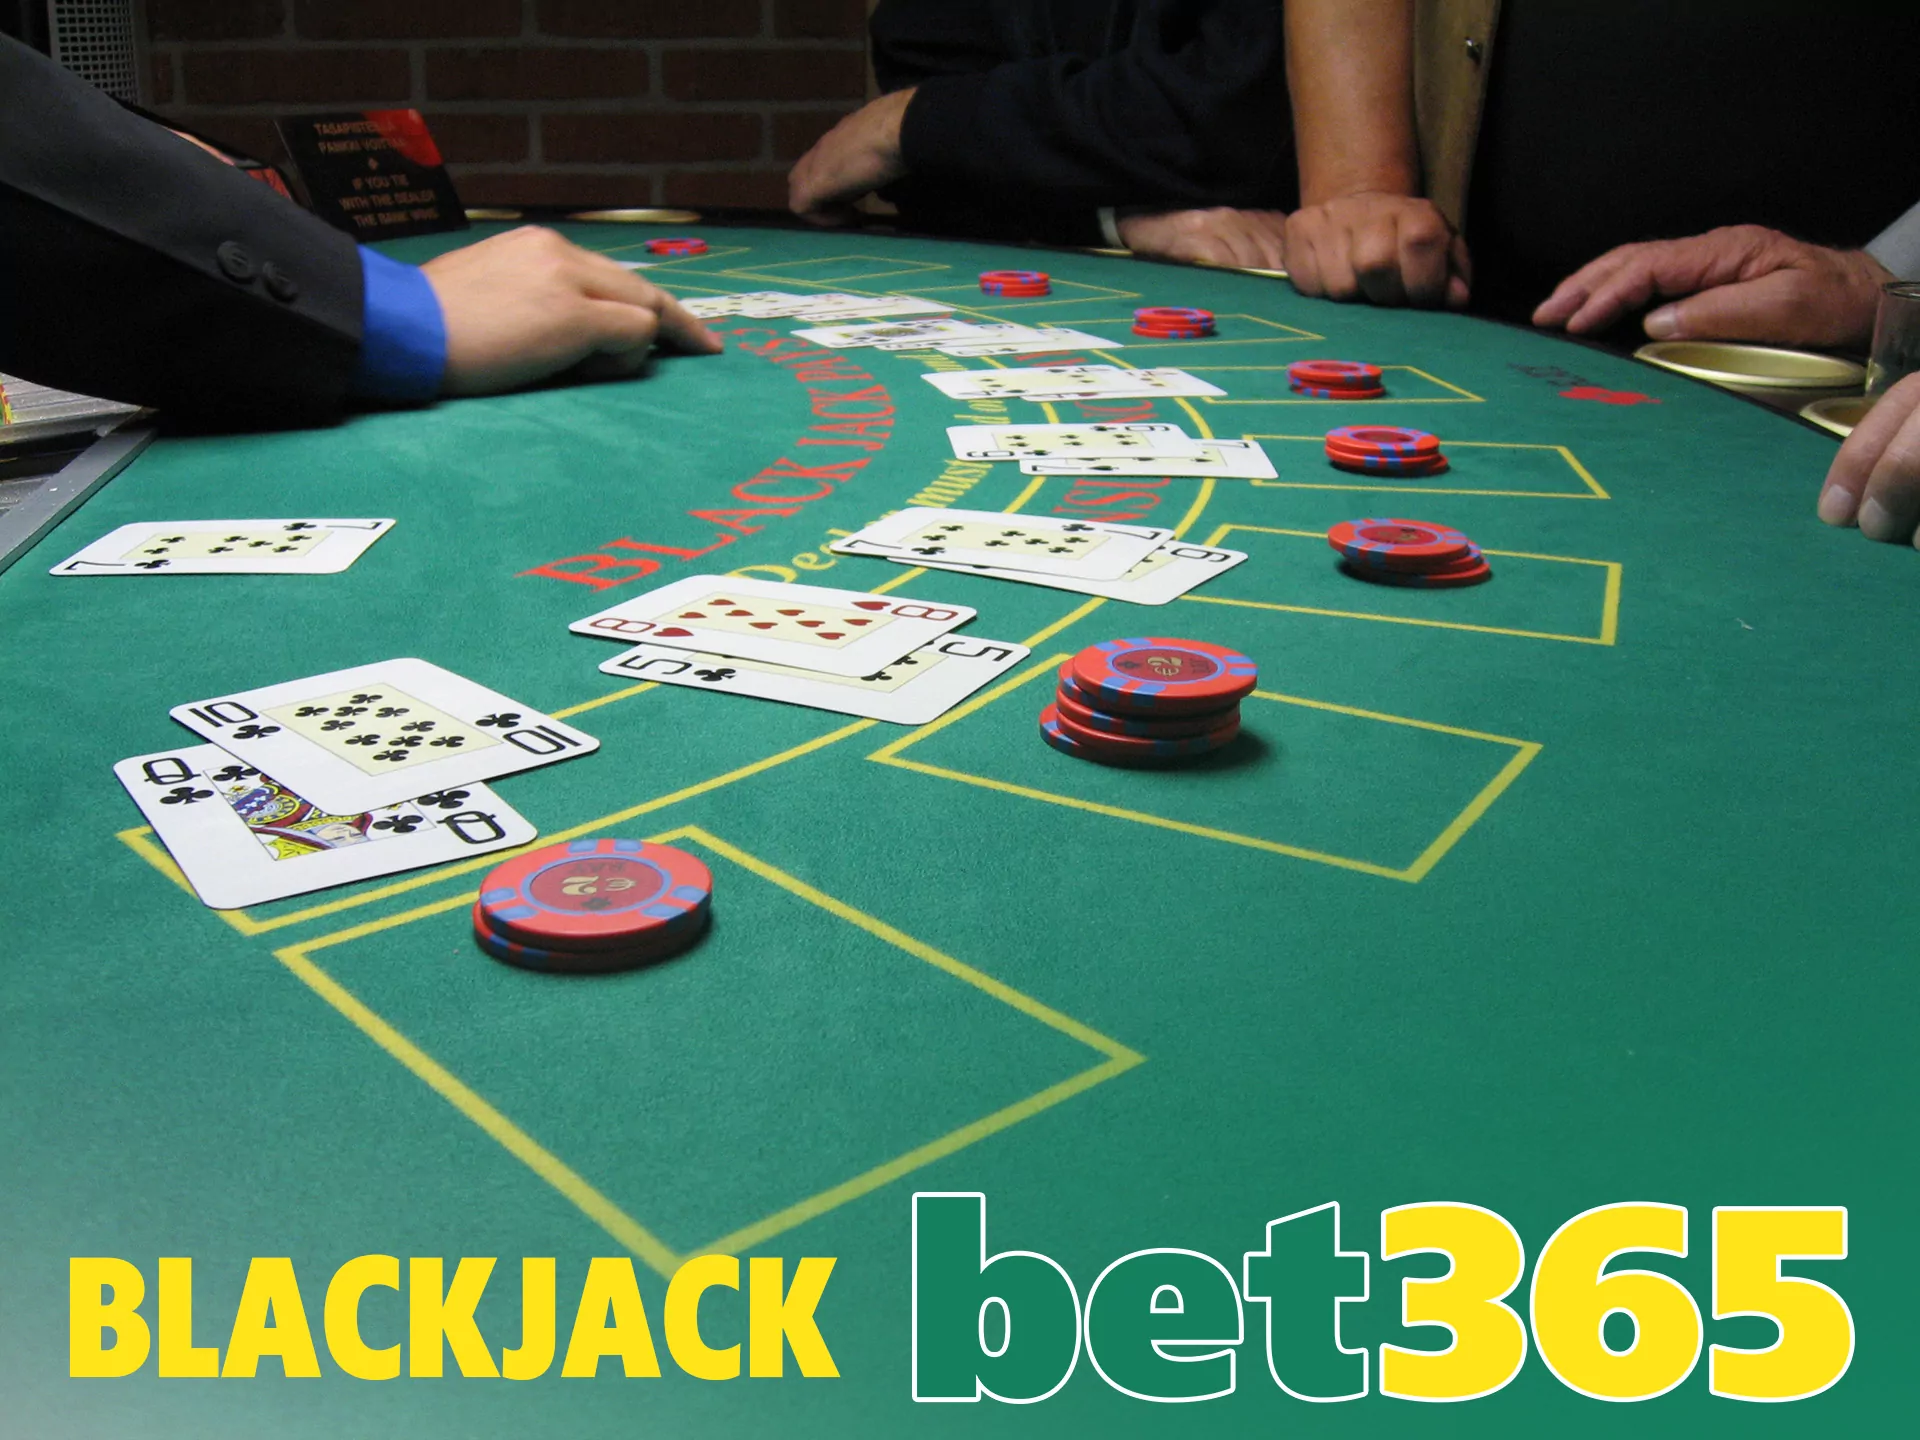 Win big cash prizes playing blackjack games.